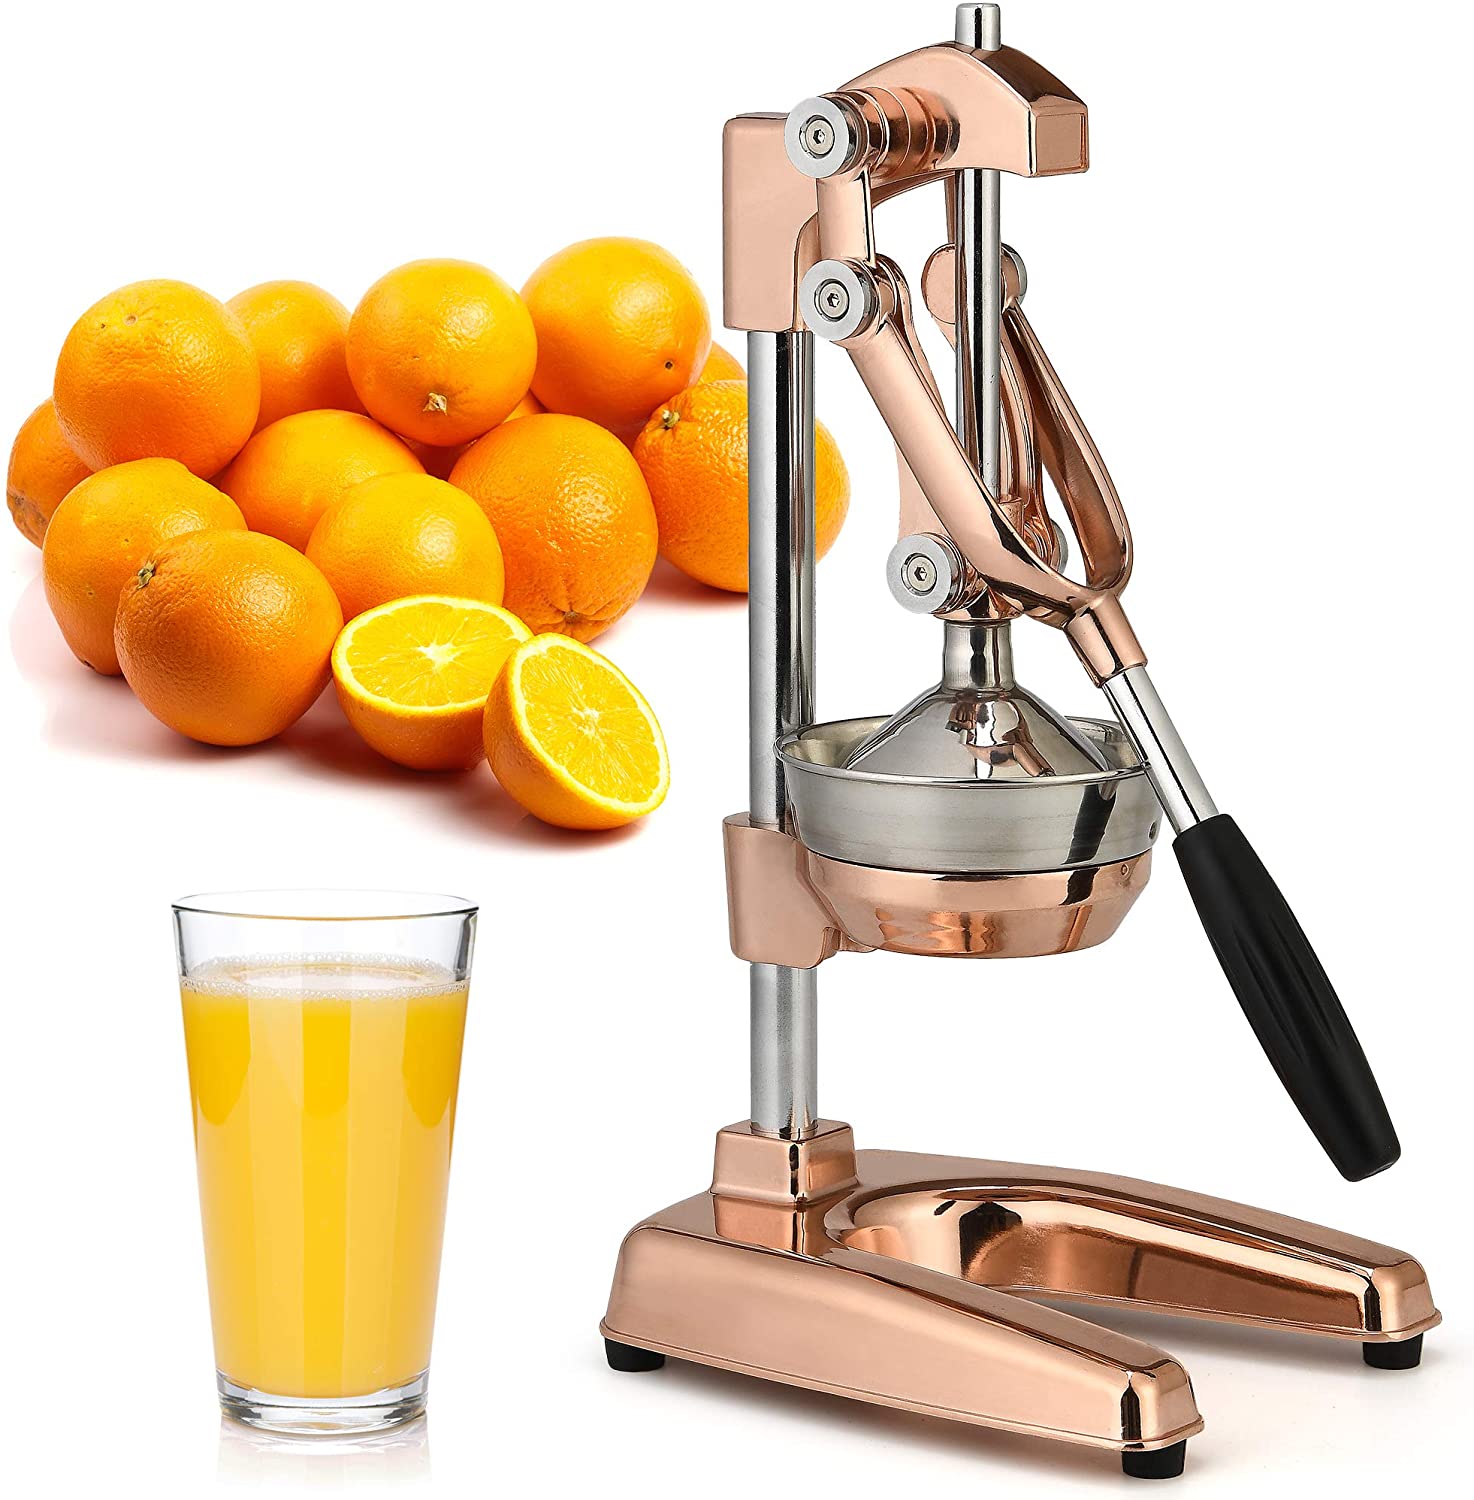 Review of Zulay Professional Citrus Juicer - Premium Manual Citrus Press and Orange Squeezer